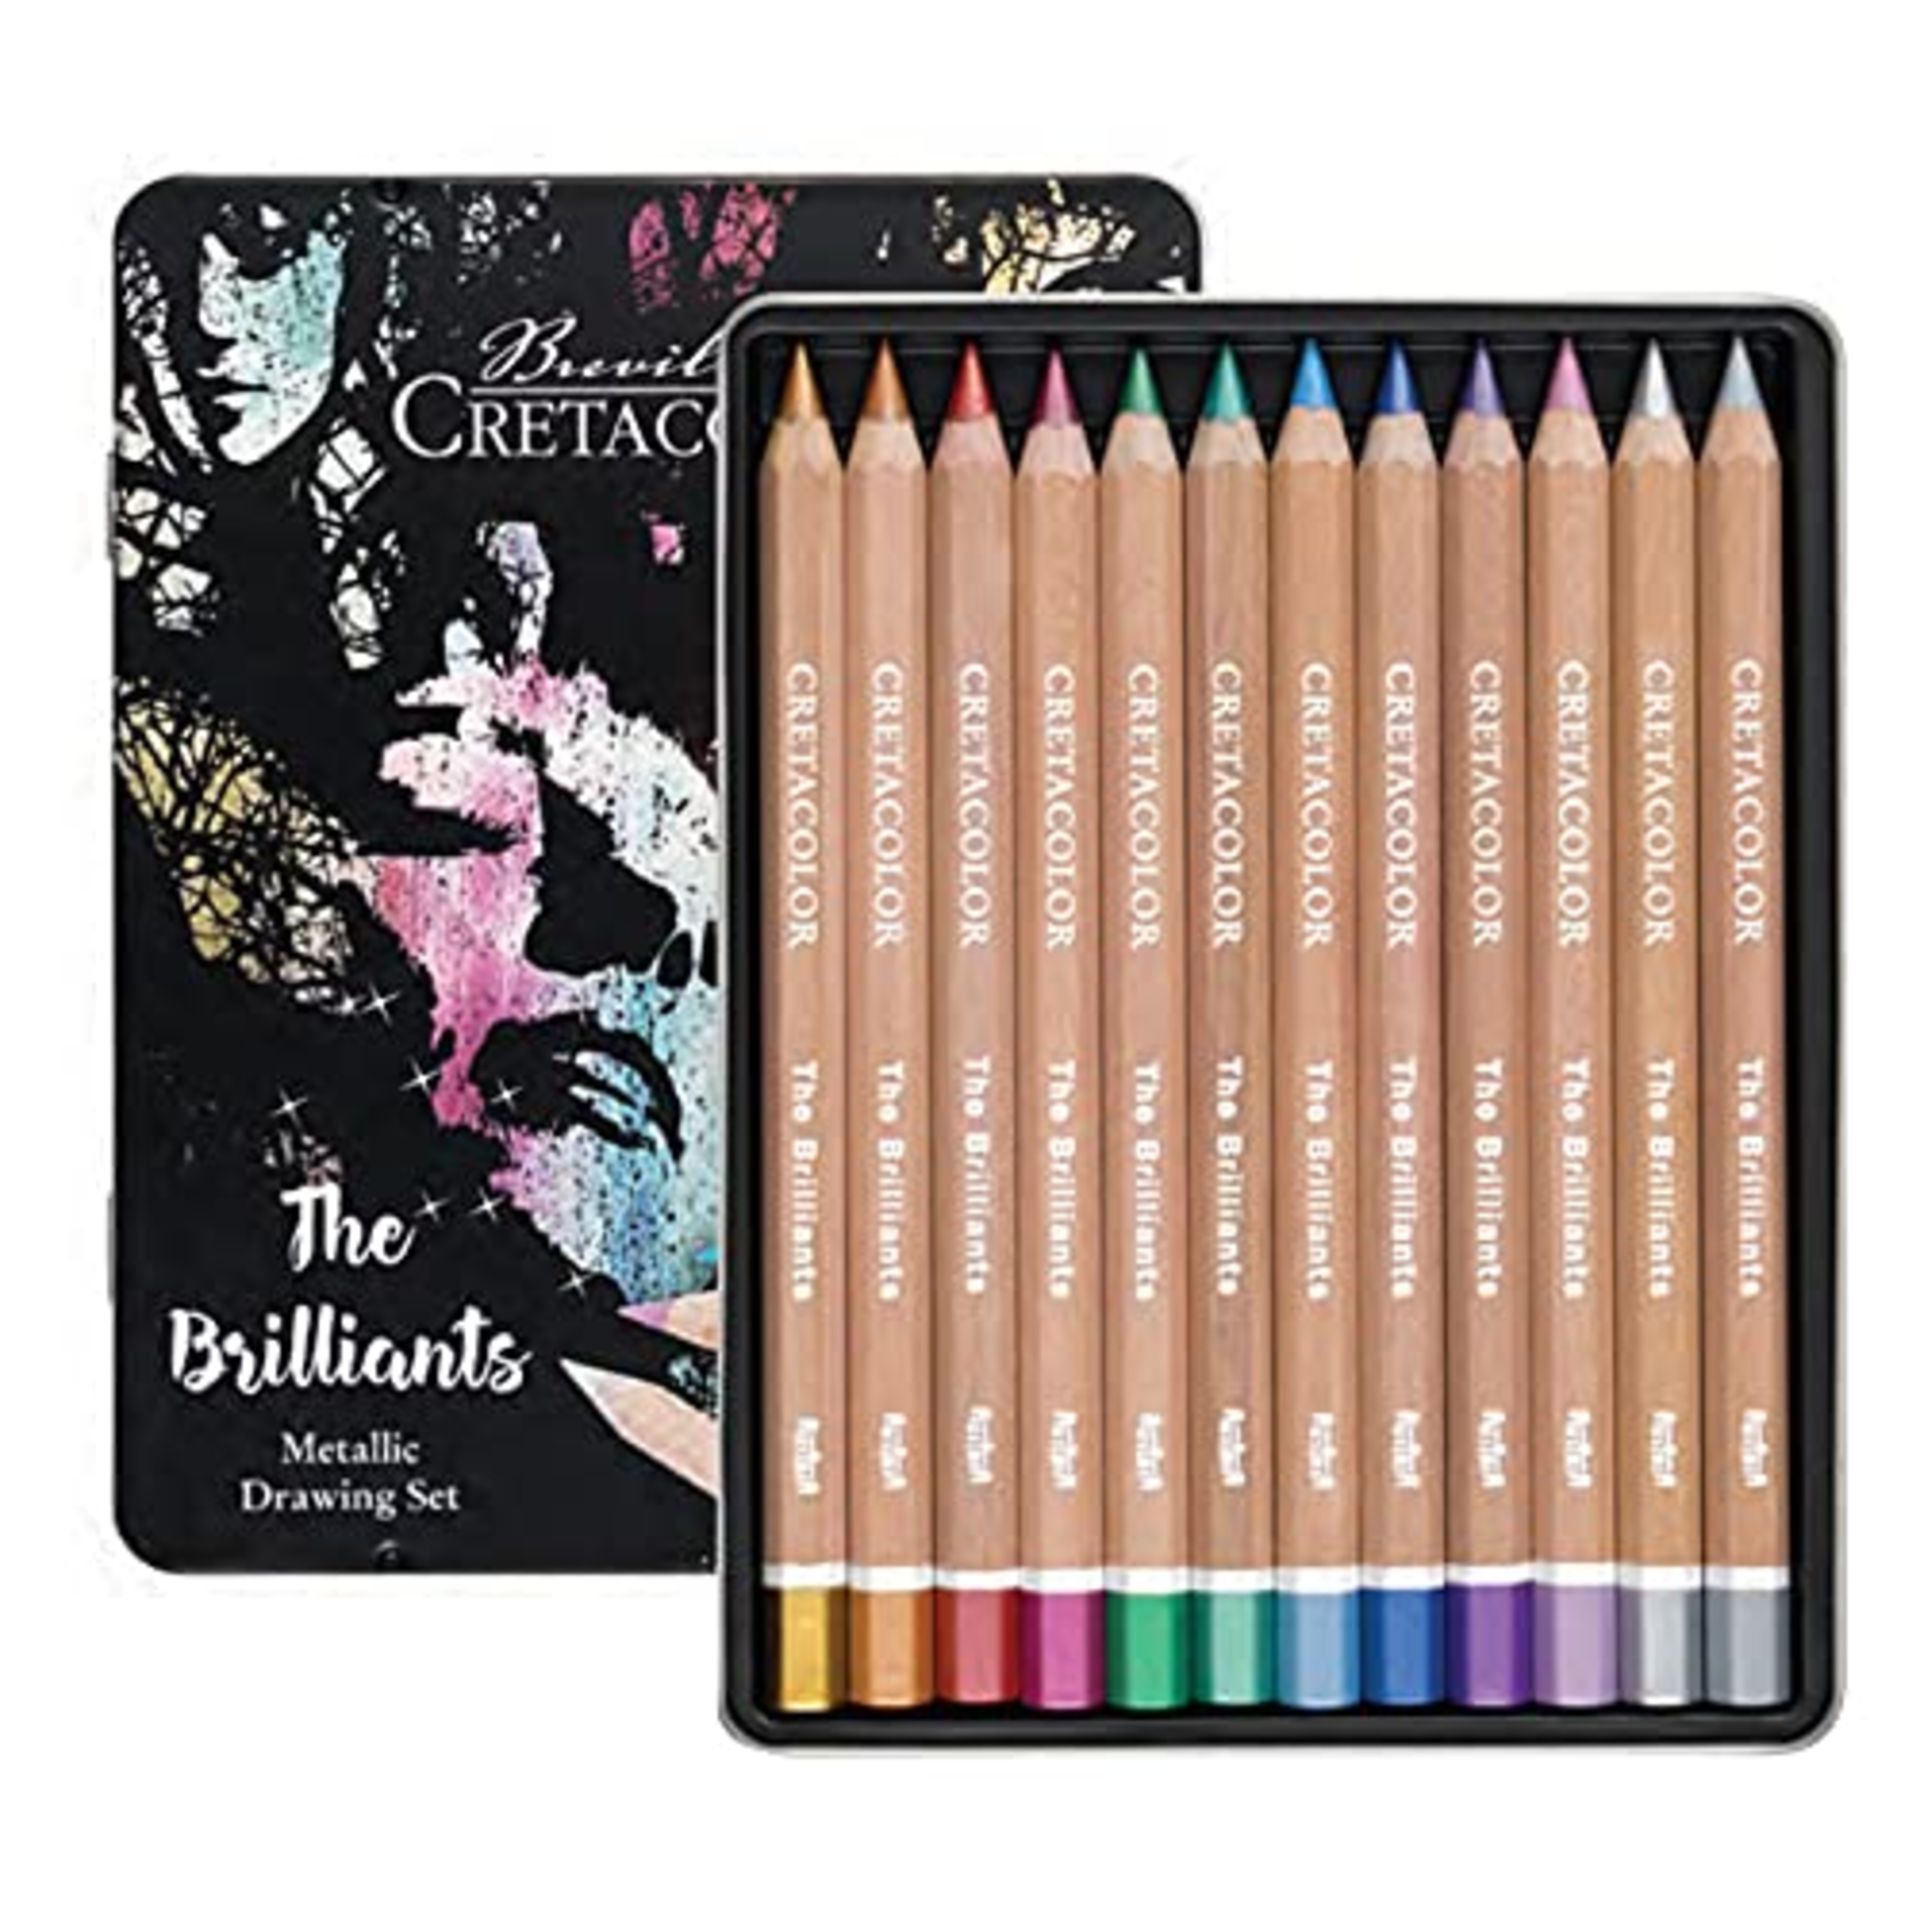 CRETACOLOR The Brilliants, 12 colored pencils, metallic colors, highly pigmented, soft